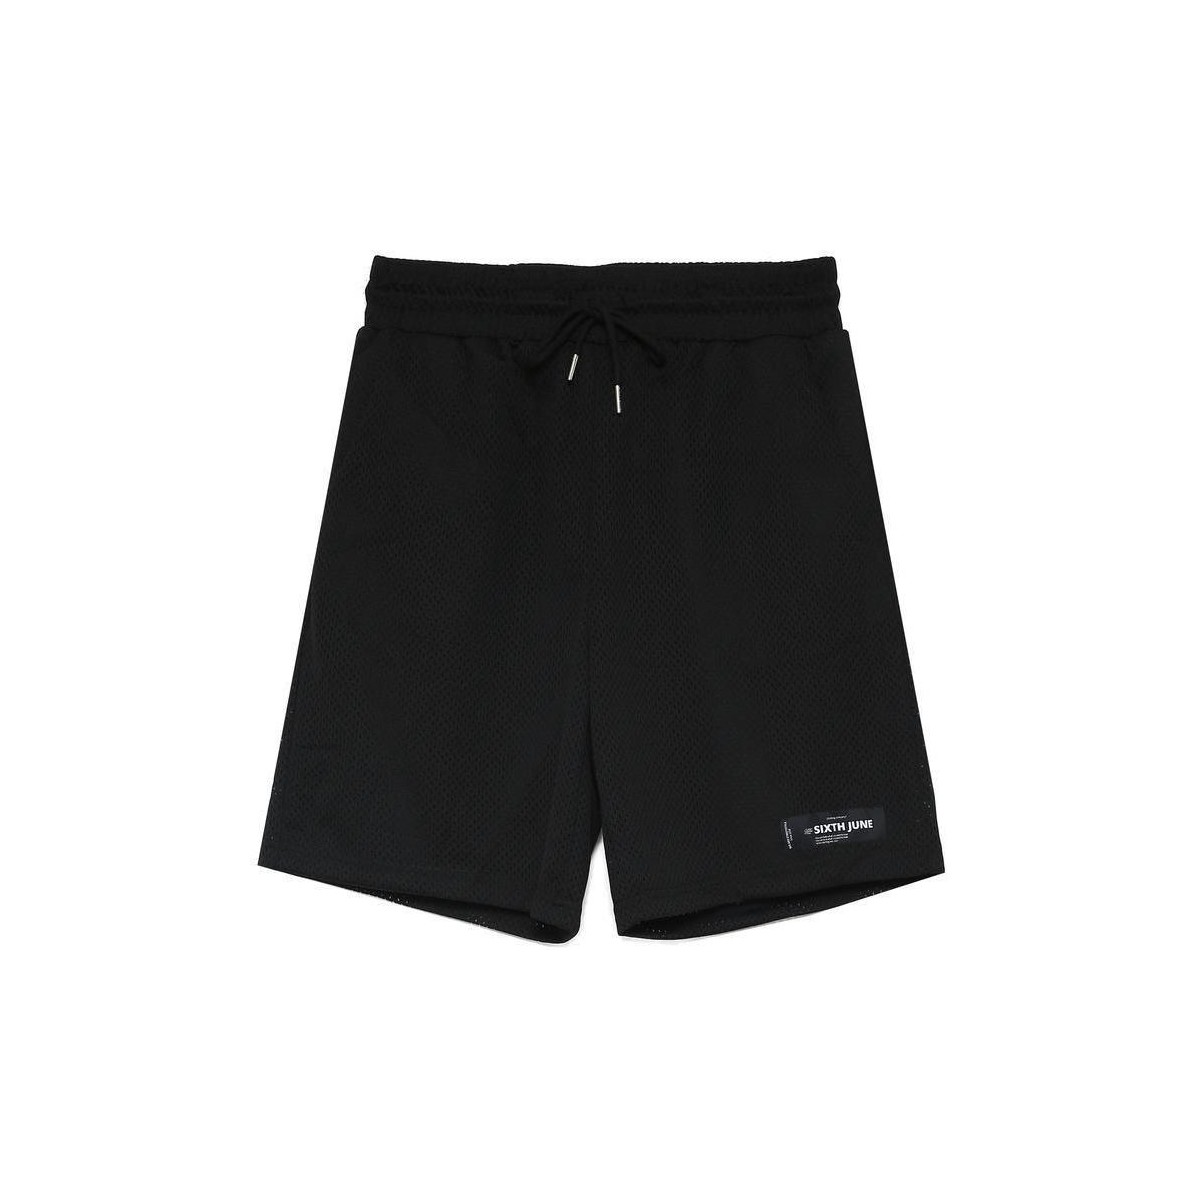 Kleidung Herren Shorts / Bermudas Sixth June Short  Mesh Logo Schwarz